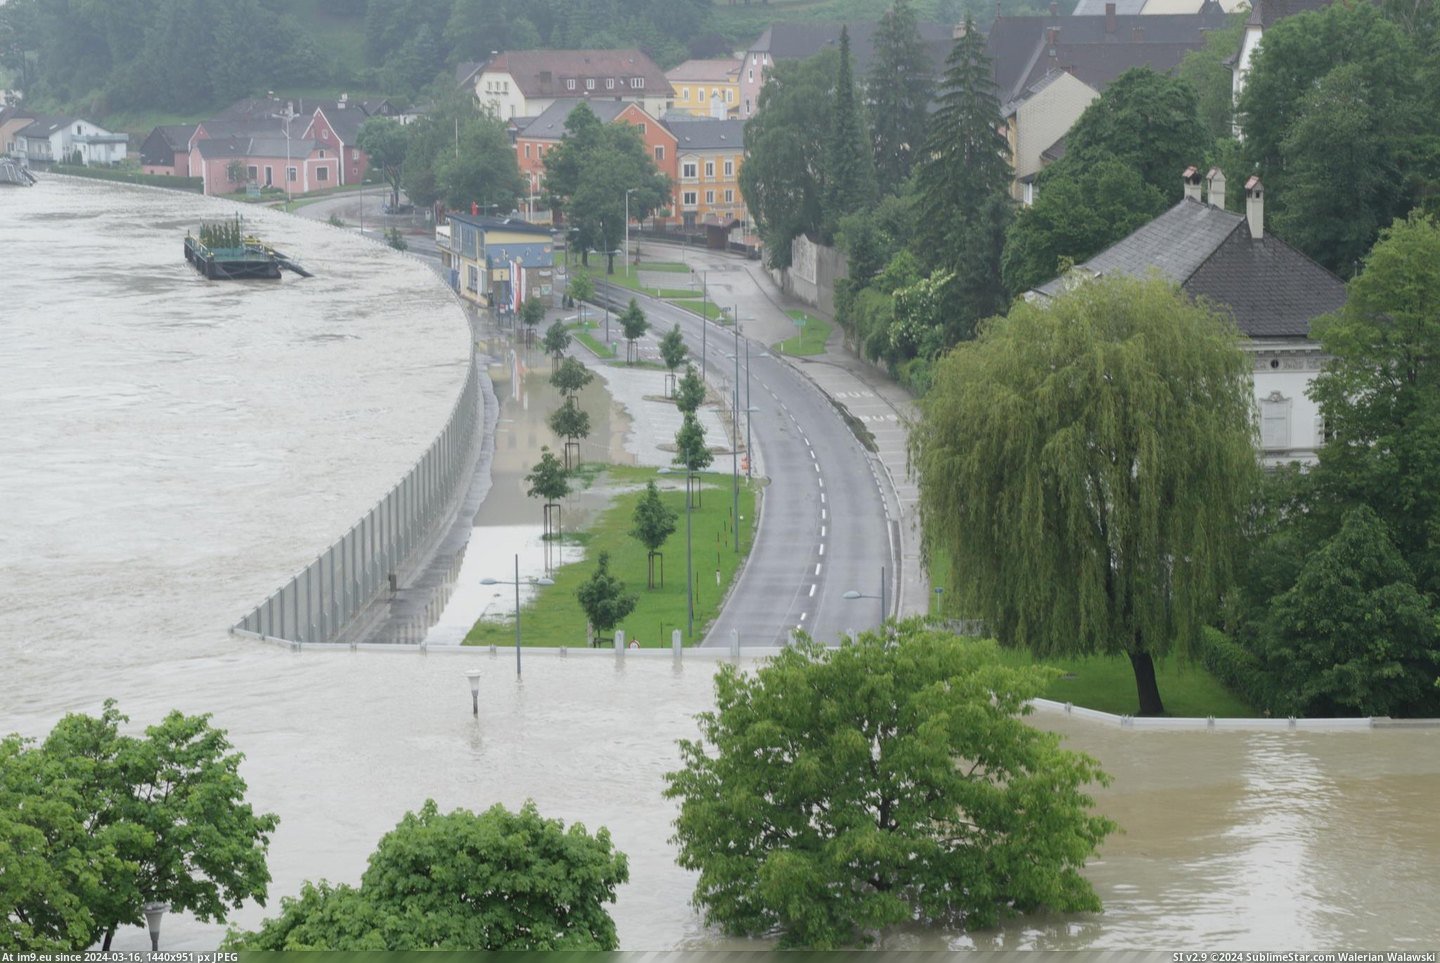 #Amazing #Wall #Engineering #Feat #Flood #Austria #Mobile [Pics] Mobile flood wall in Austria, amazing feat of engineering. Pic. (Bild von album My r/PICS favs))